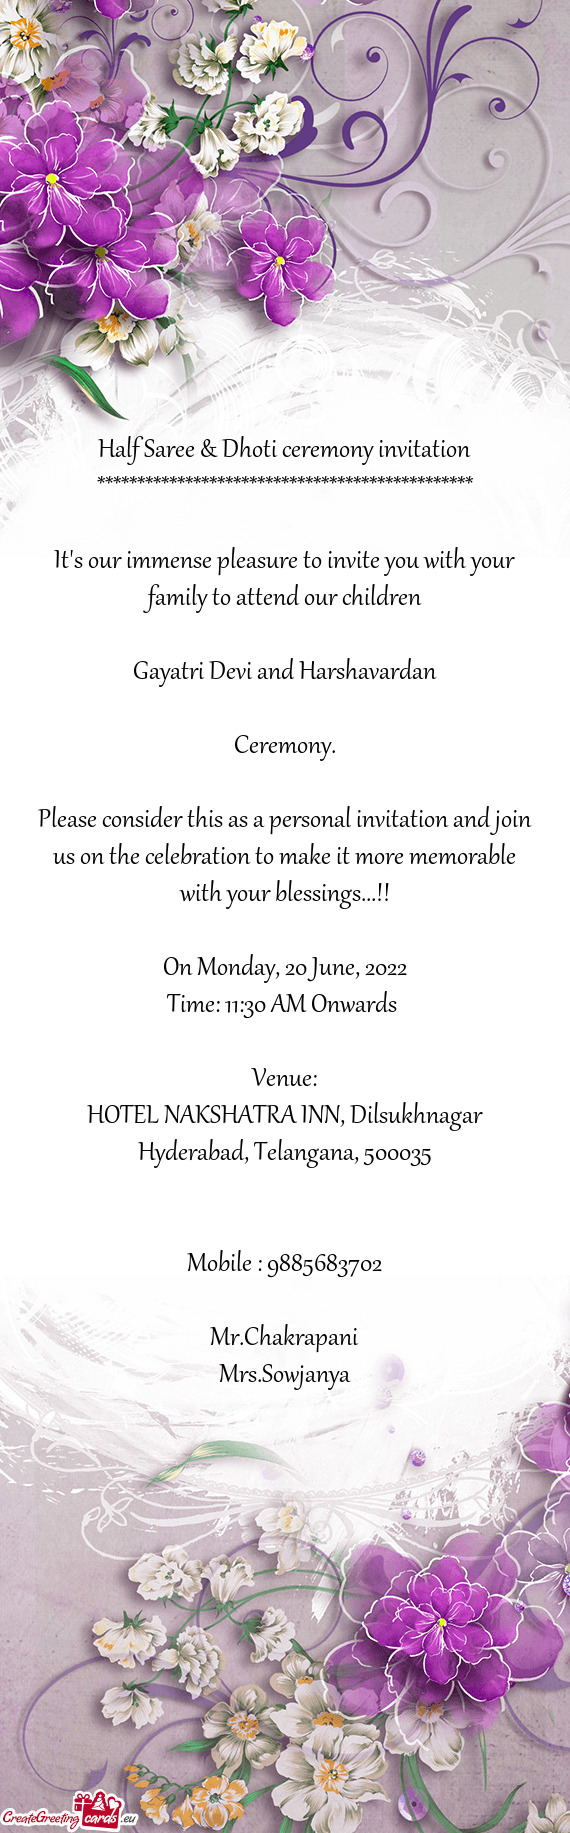 Gayatri Devi and Harshavardan